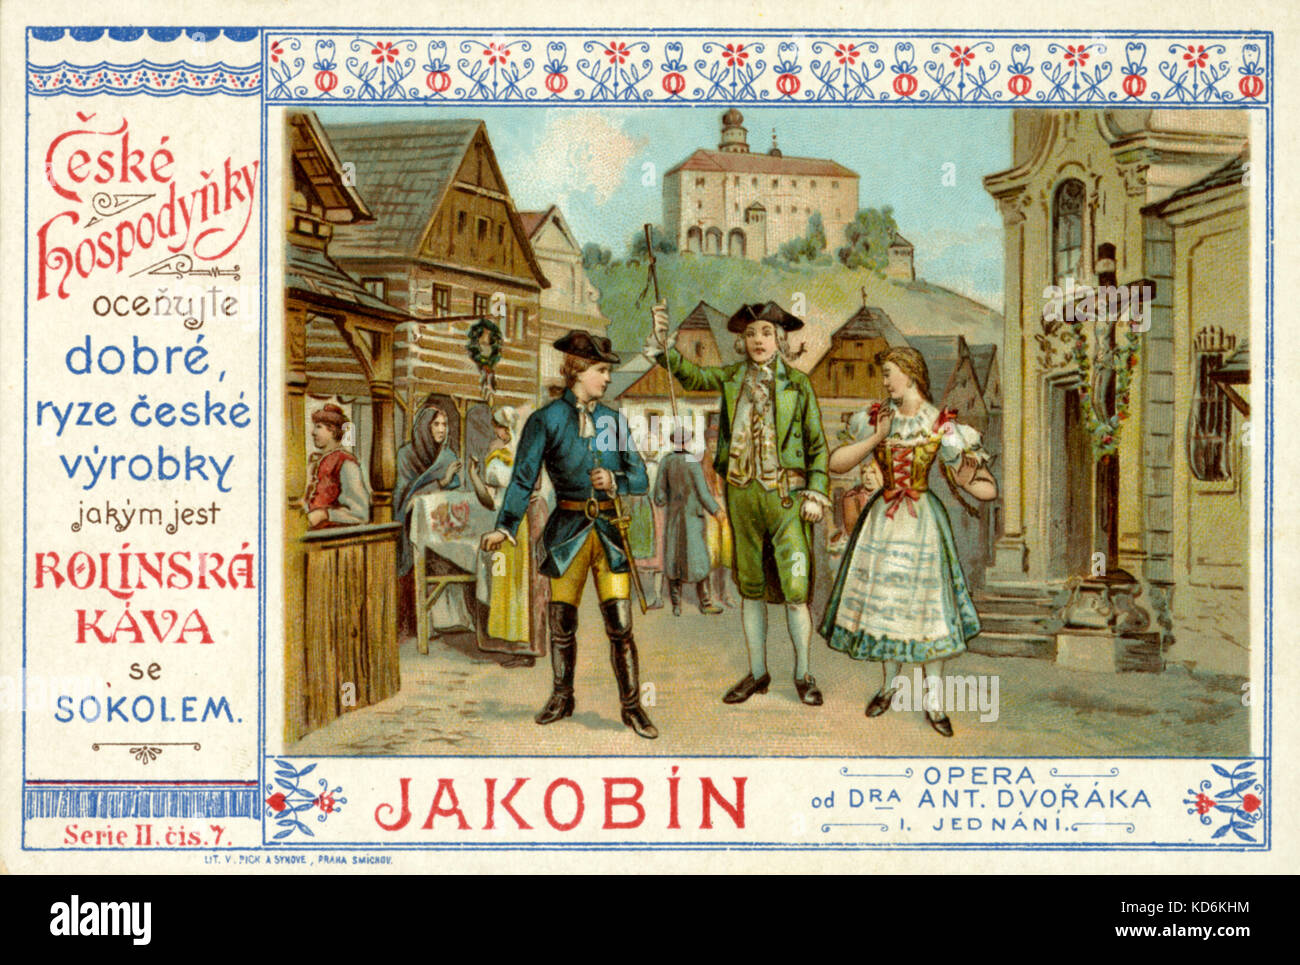 Szene aus Antonin Dvoraks Oper "Jakobin' auf Karte für Ceske Hospodynky. Tschechische Komponist, 8.September 1841 - 1. Mai 1904 Stockfoto